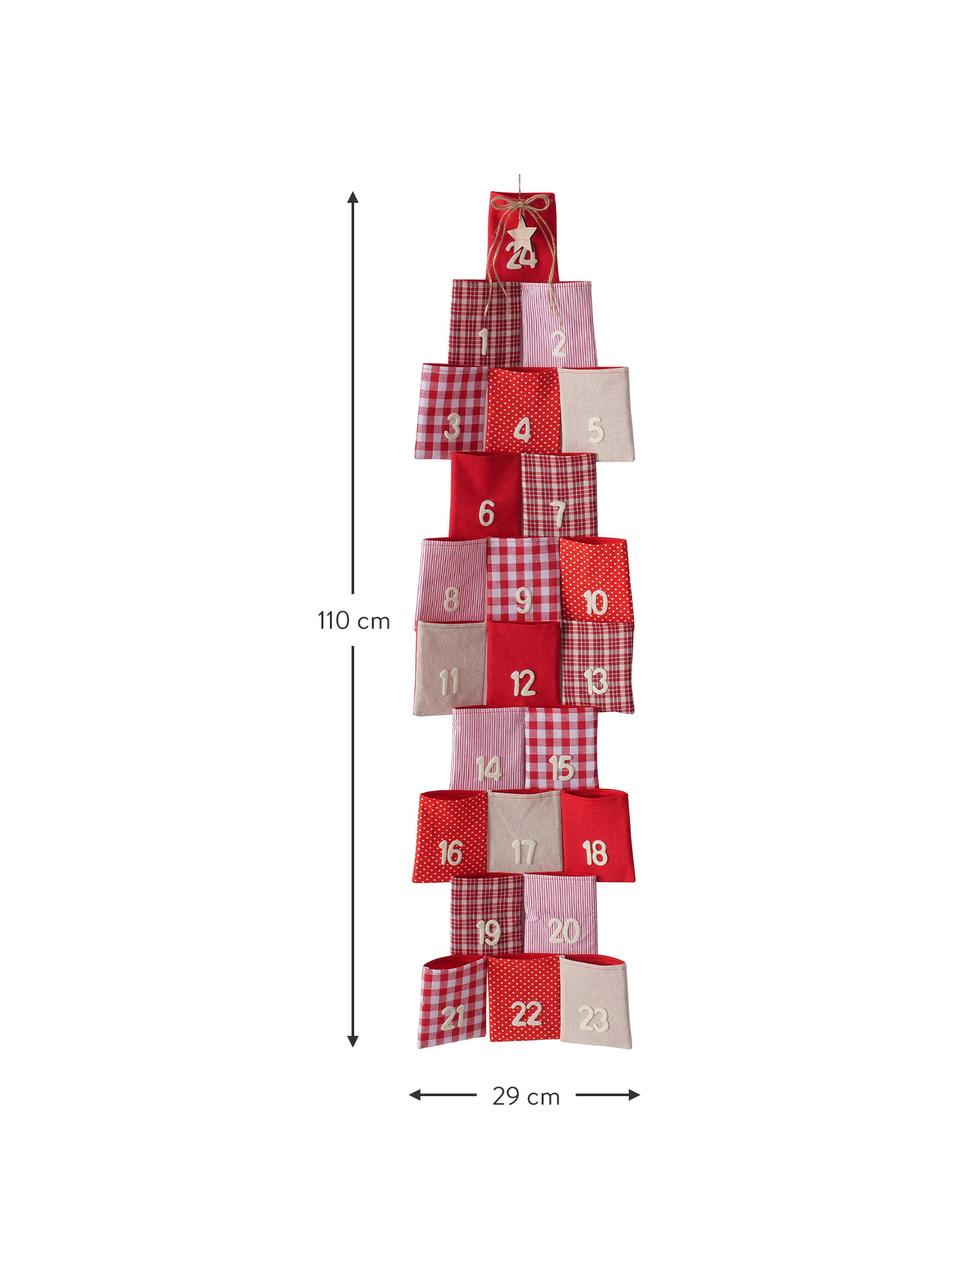 Calendario dell'avvento Edala, alt. 110 cm, Cotone, feltro di poliestere, Rosso, bianco, beige, Larg. 29 x Alt. 110 cm